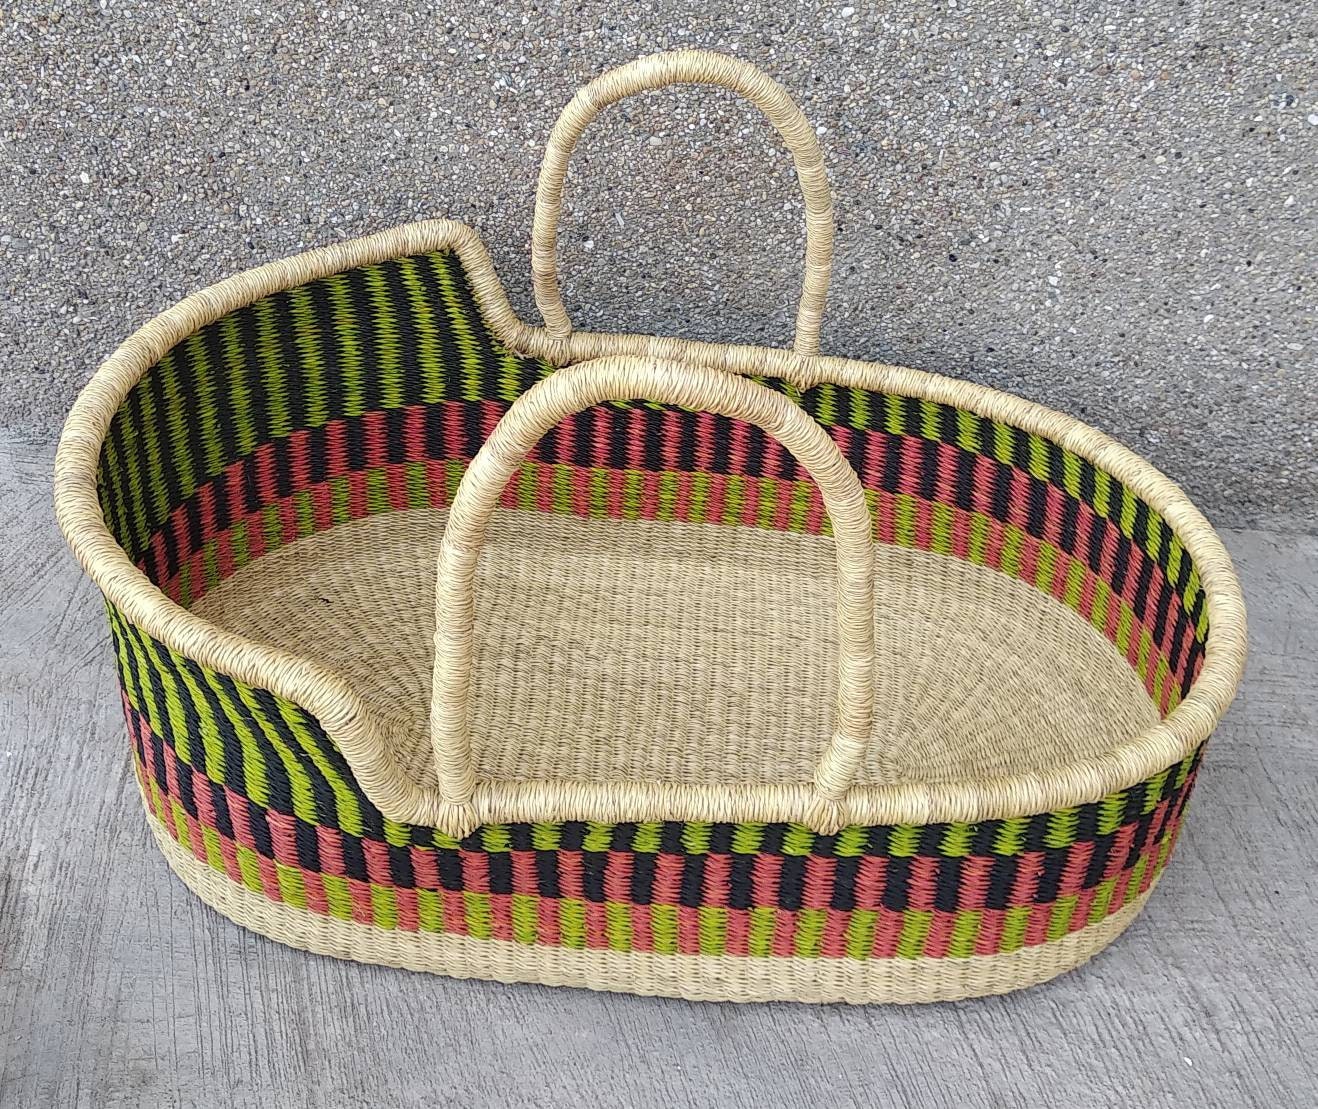 Bassinet | Baby bassinet | Nursery bed | Nursery bedding | Moses basket | African basket | African moses basket | Baby basket | Bolga basket - AfricanheritageGH